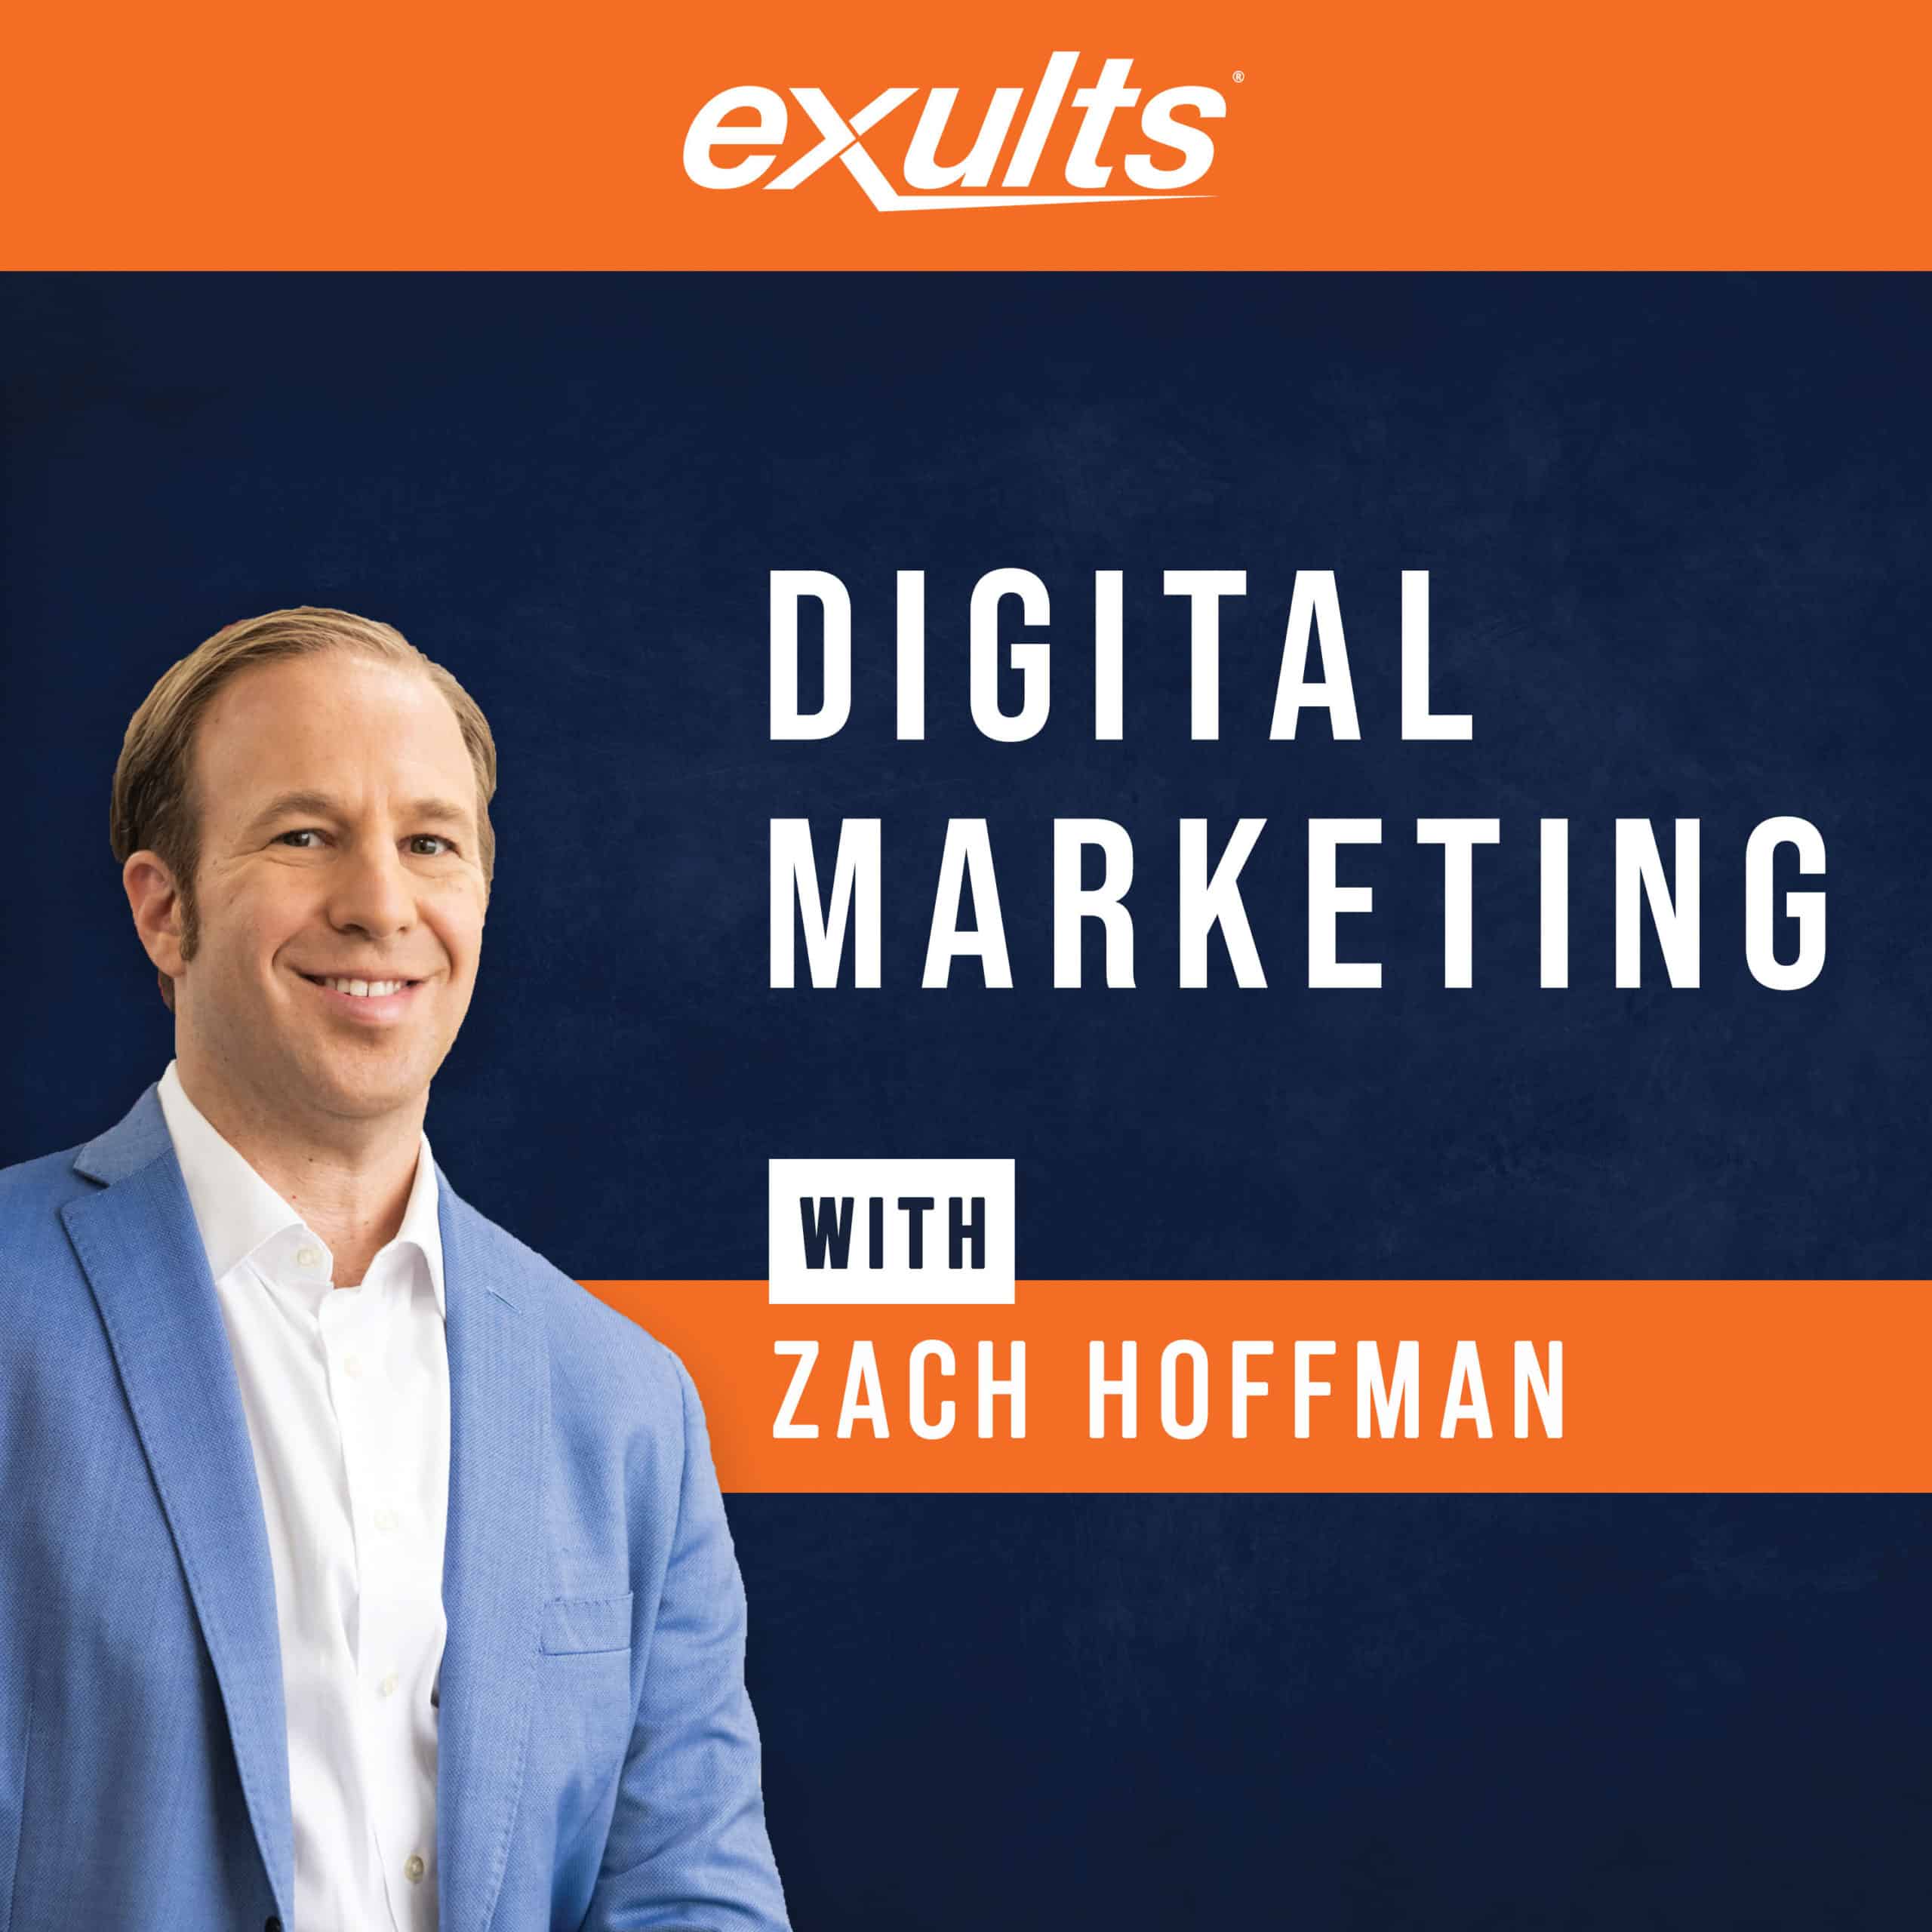 Digital marketing with zach hoffman